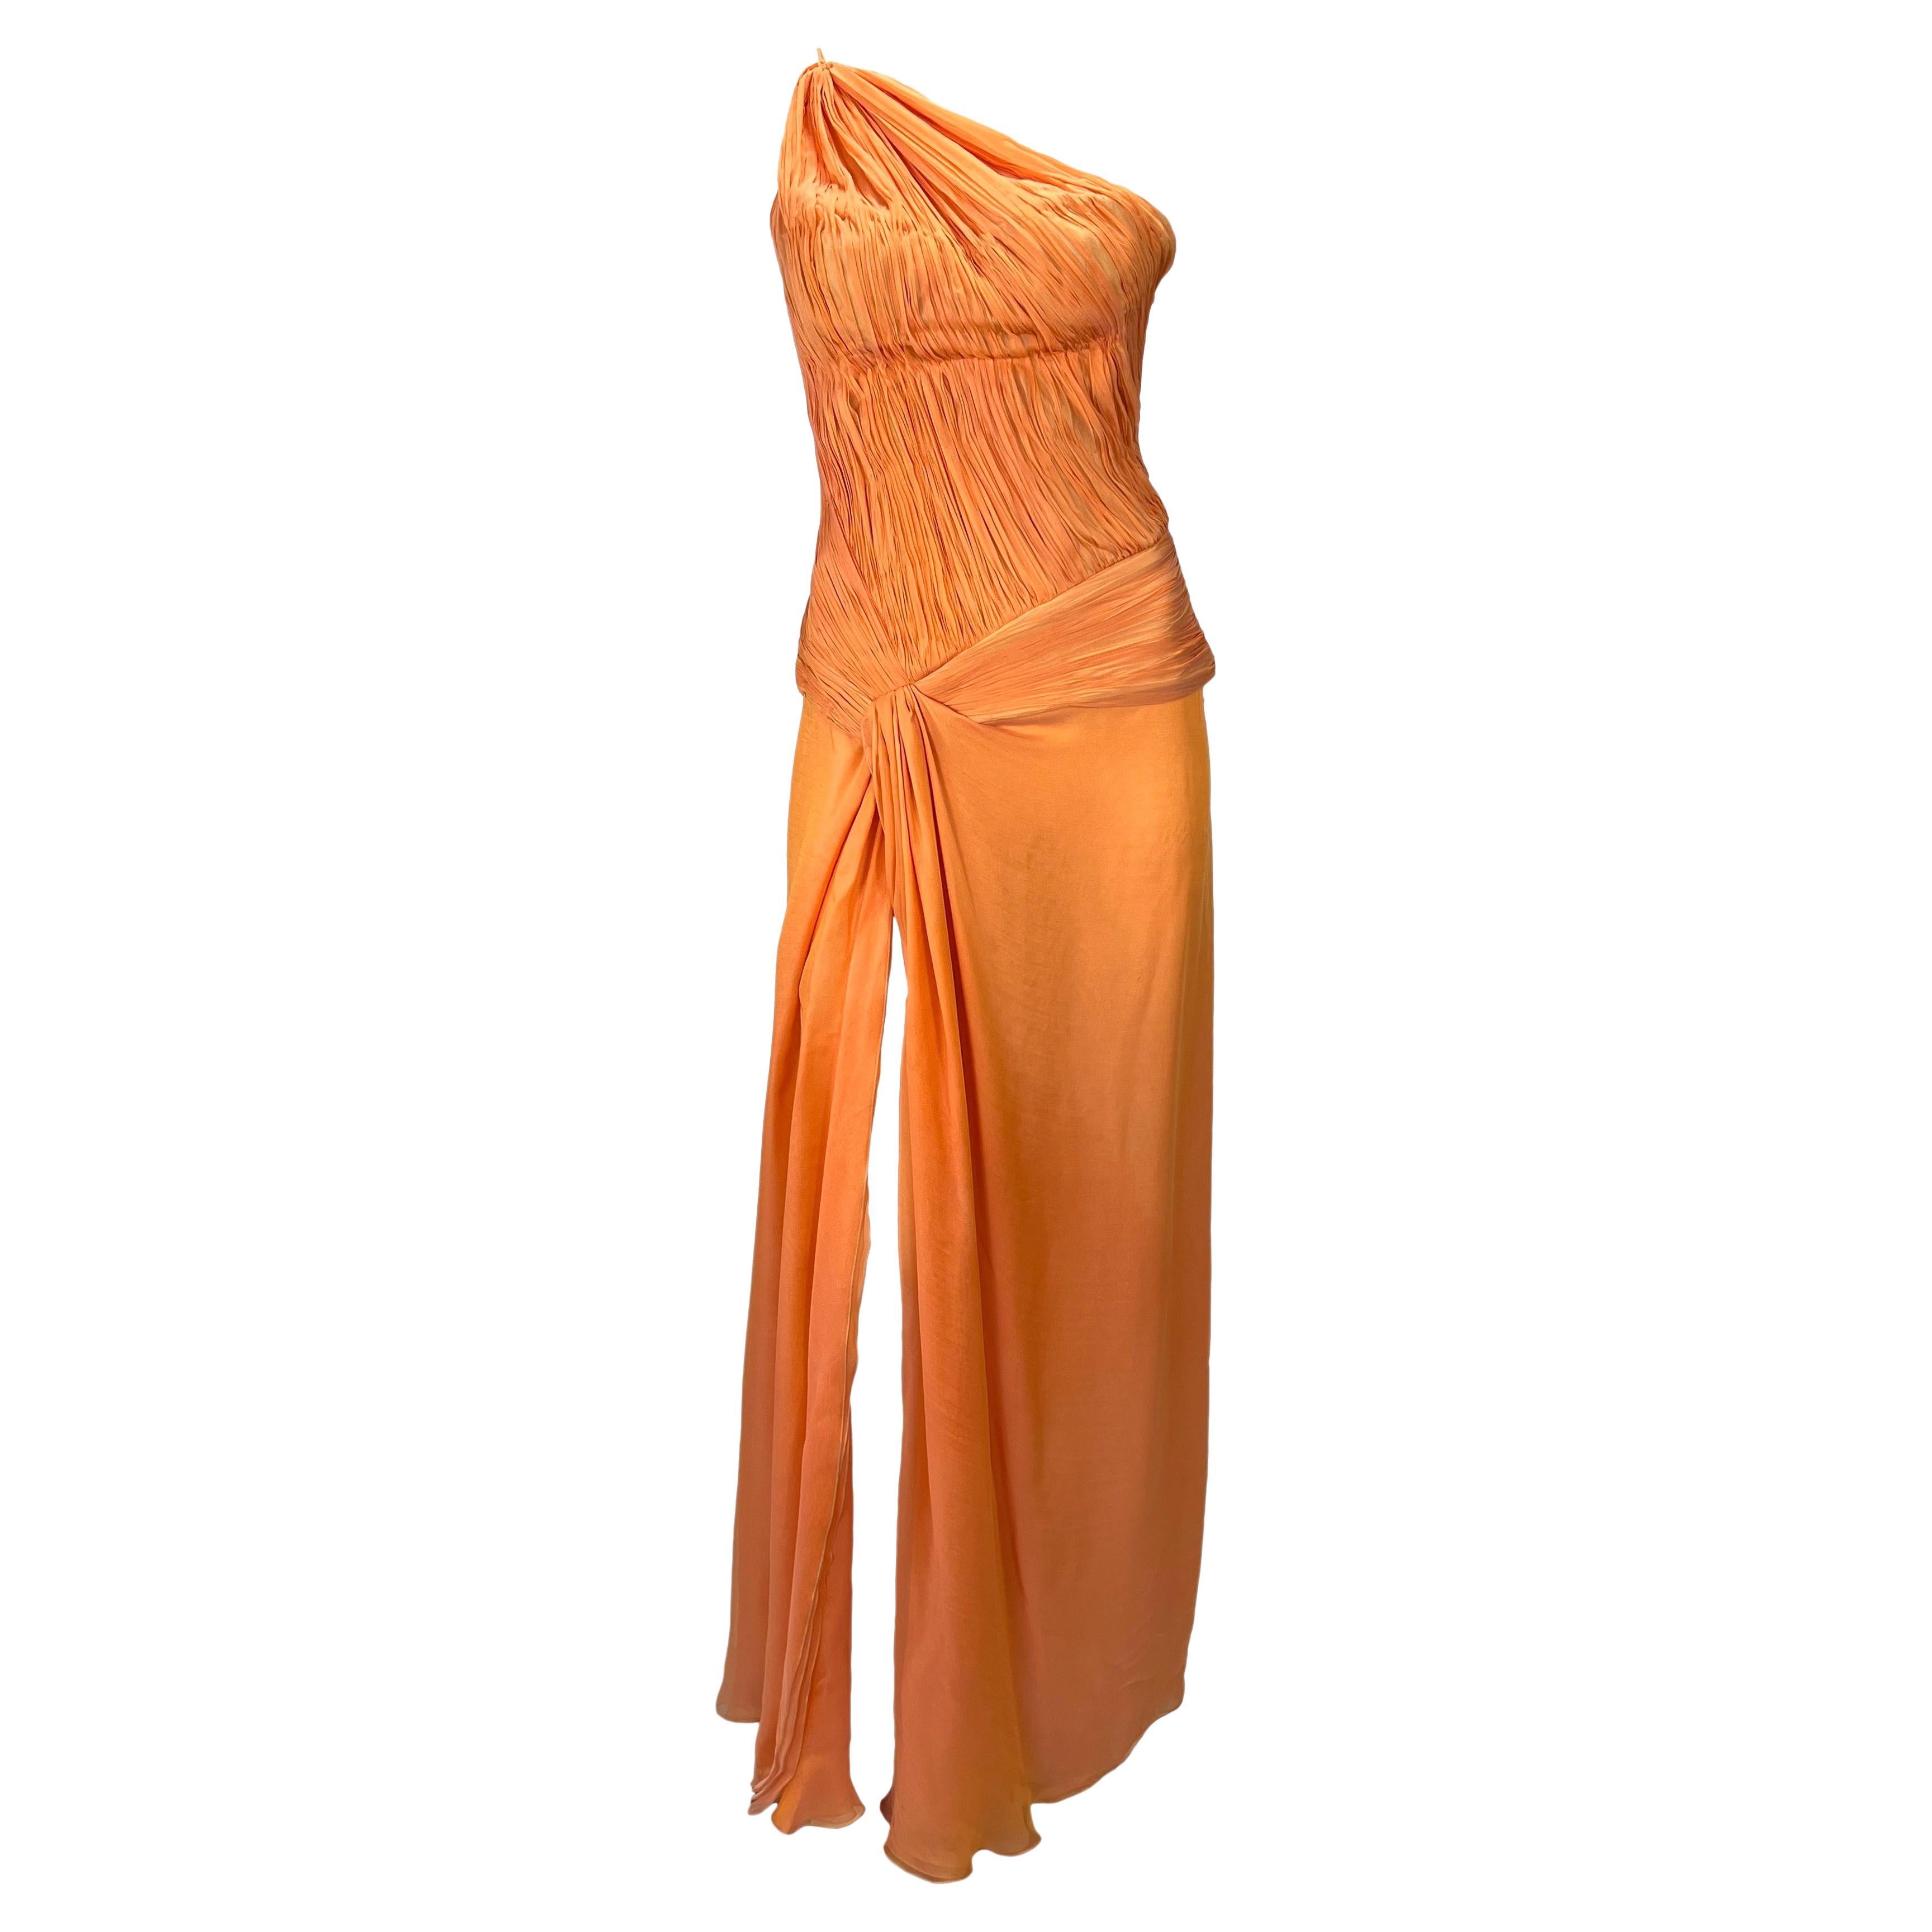 S/S 2005 Roberto Cavalli Ruched Orange Silk Chiffon Asymmetric High Slit Gown For Sale